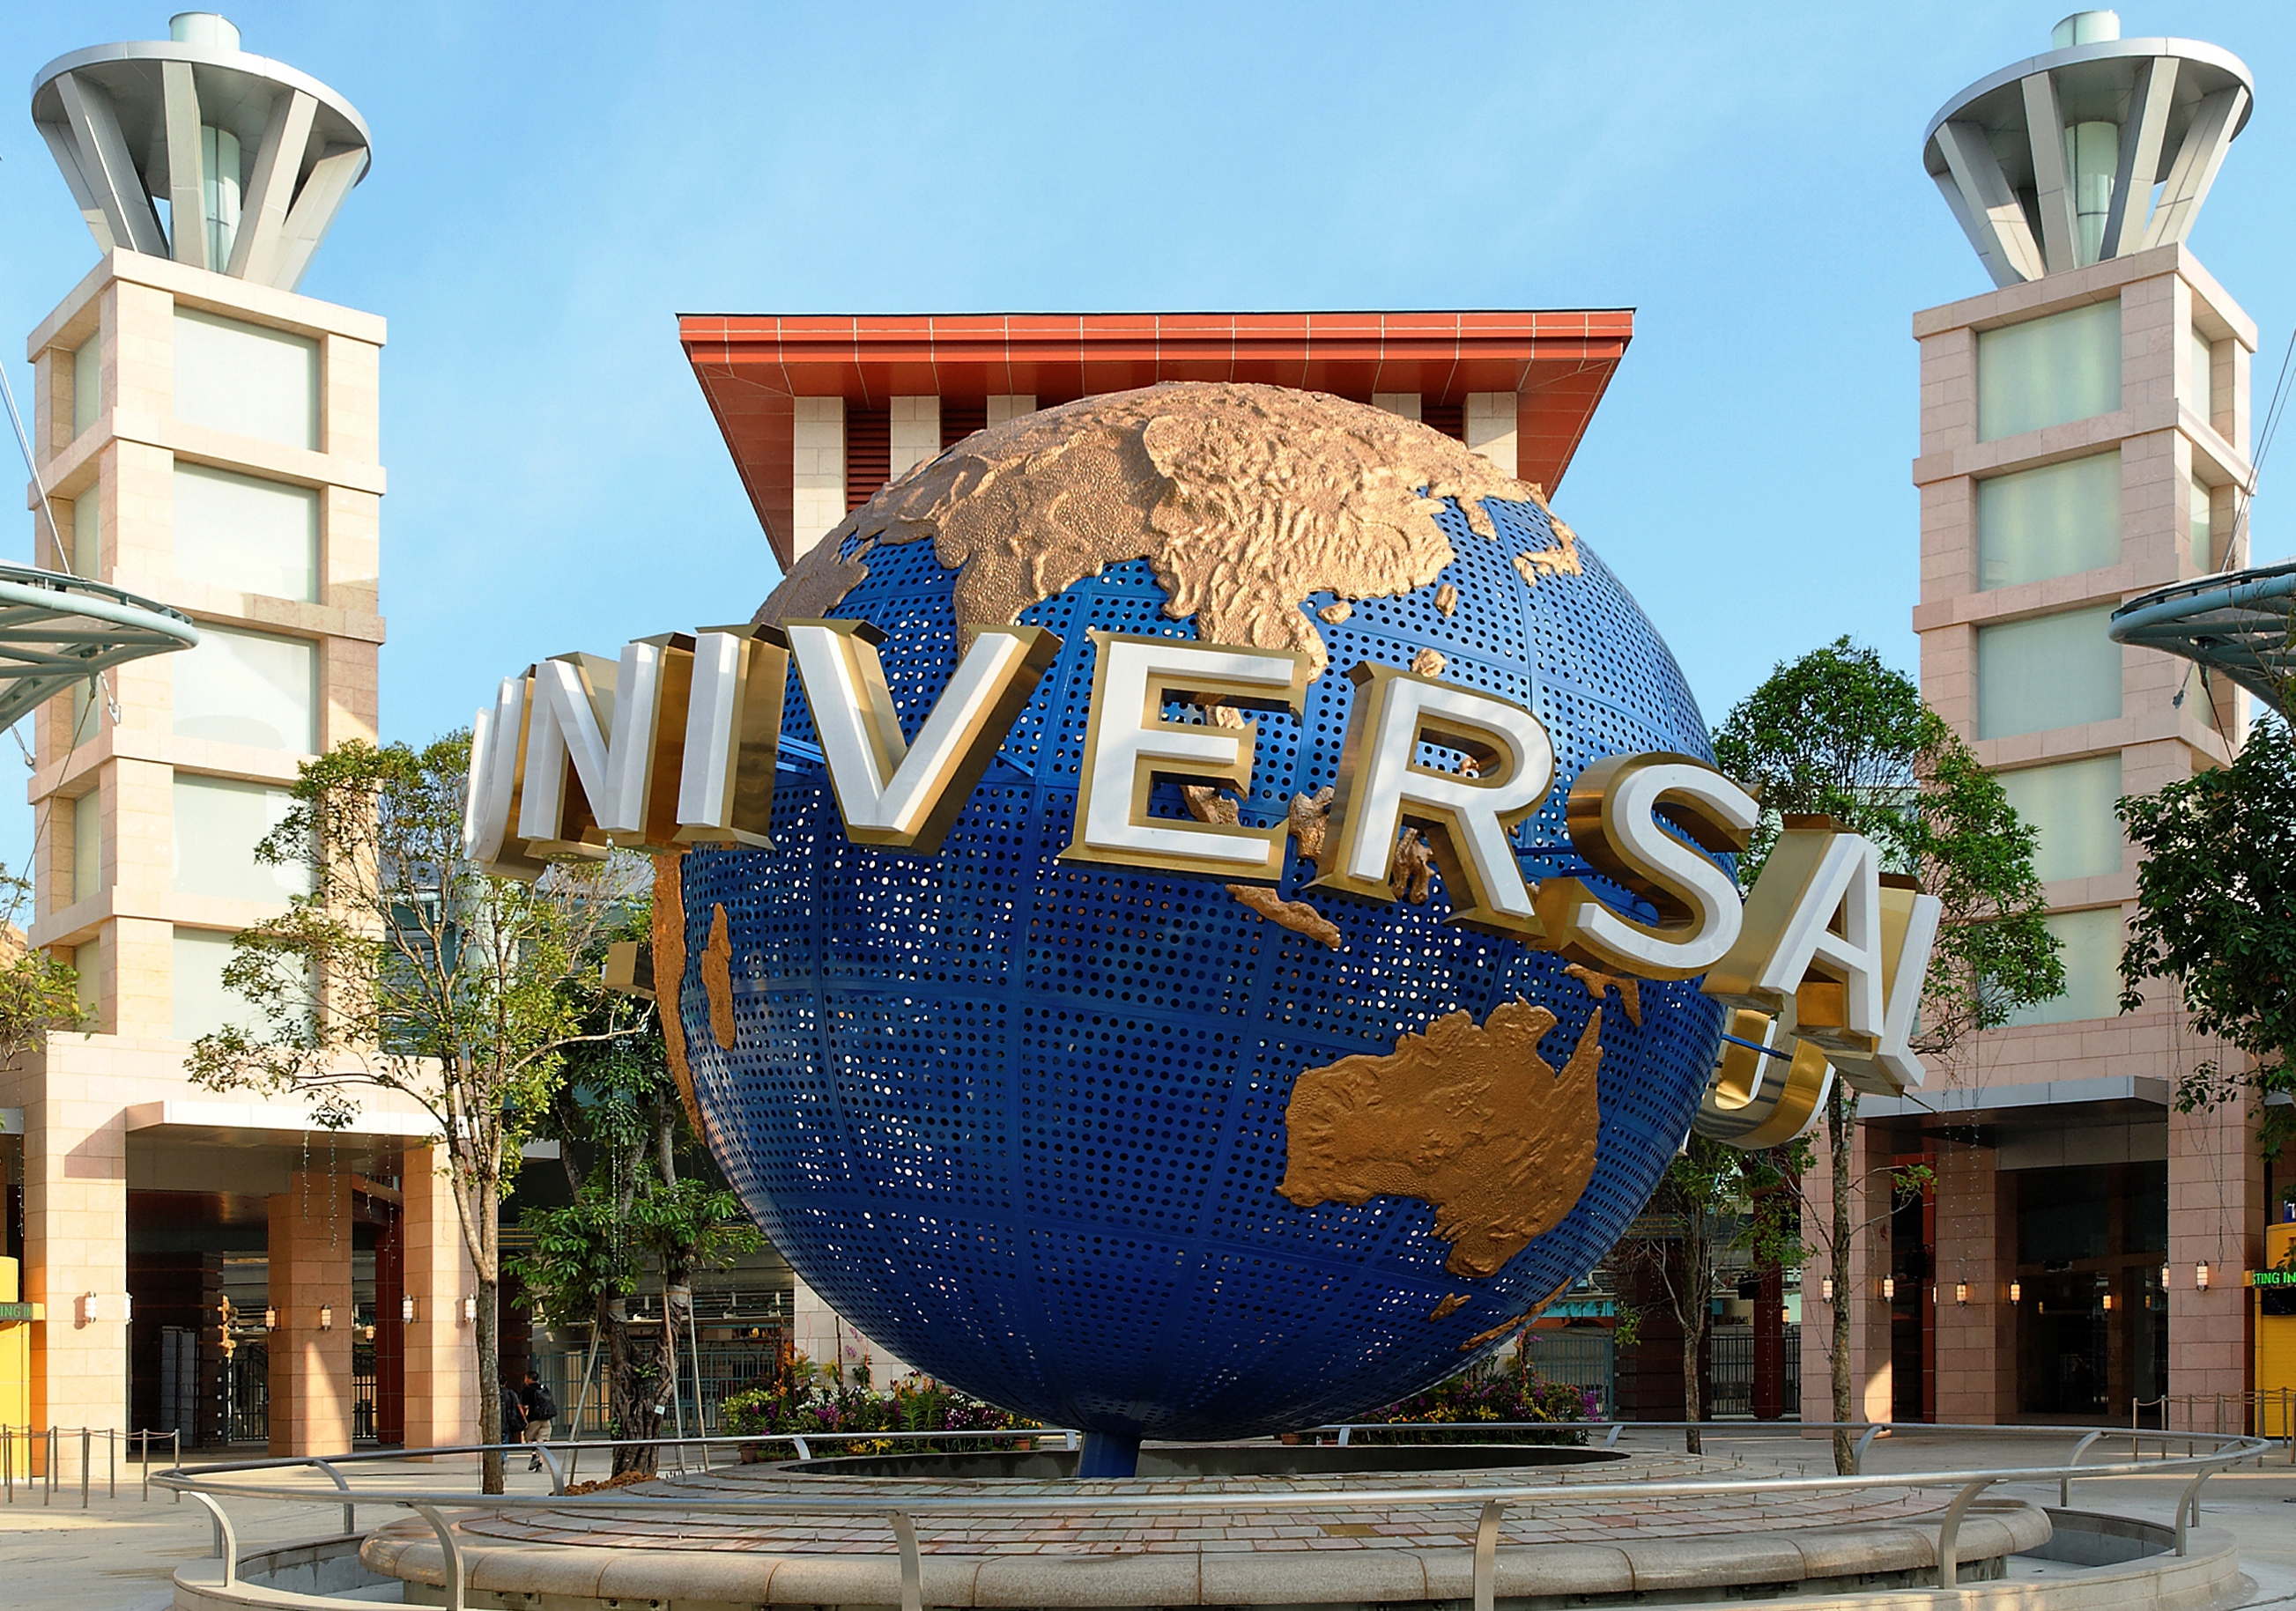 Universal Studios Singapore - Travelling Moods